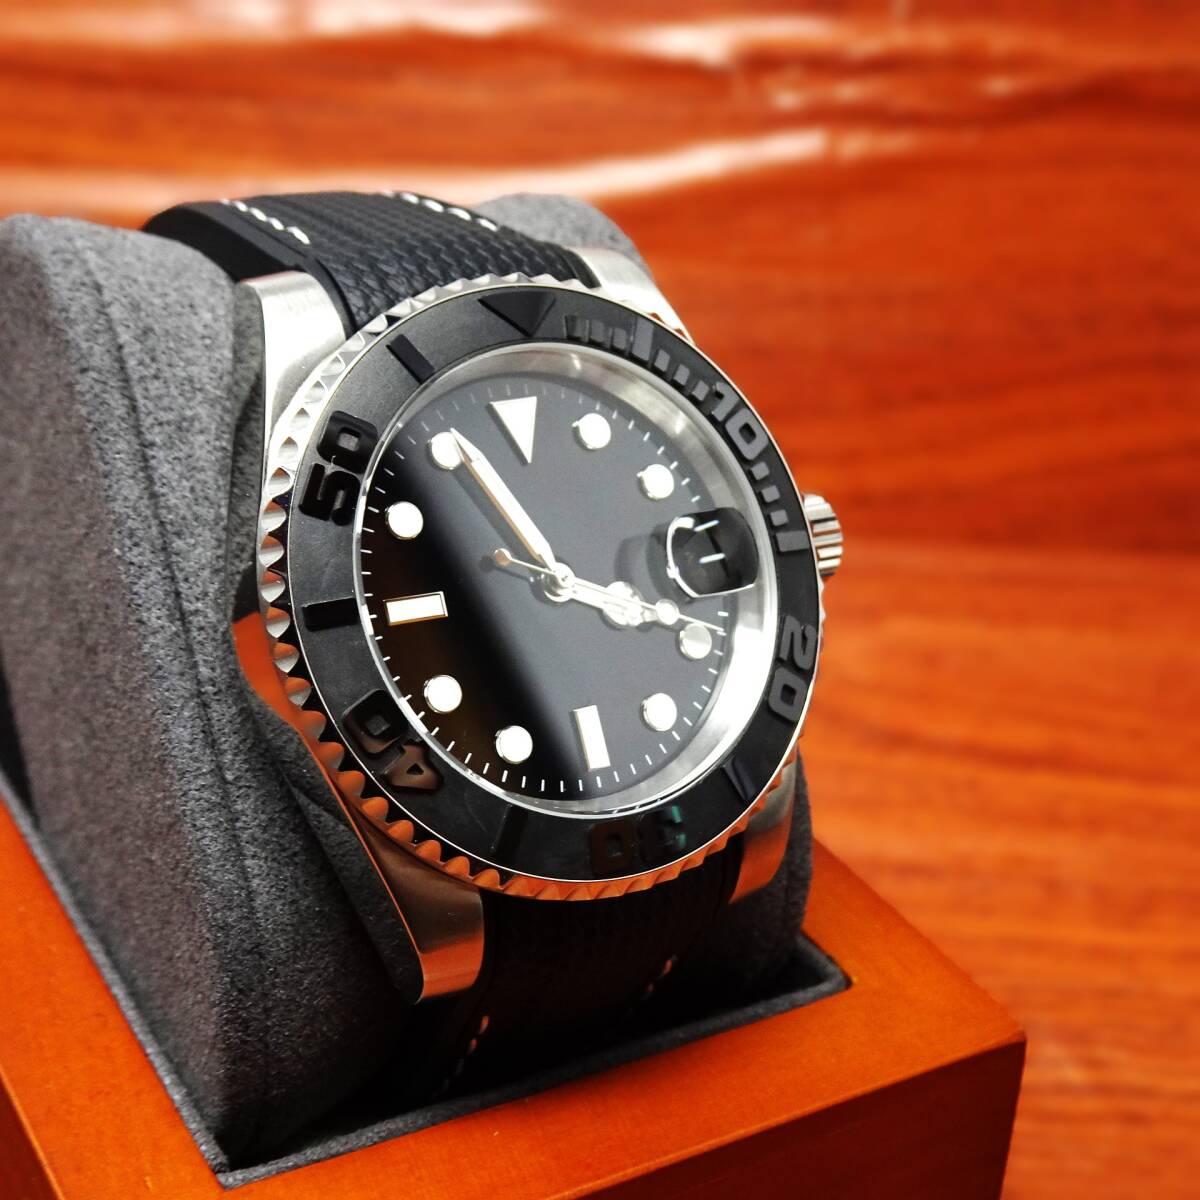  free shipping = new goods *no-ro gomodel machine yacht oma-ju watch wristwatch 2813 Movement * crystal * silicon rubber belt model 